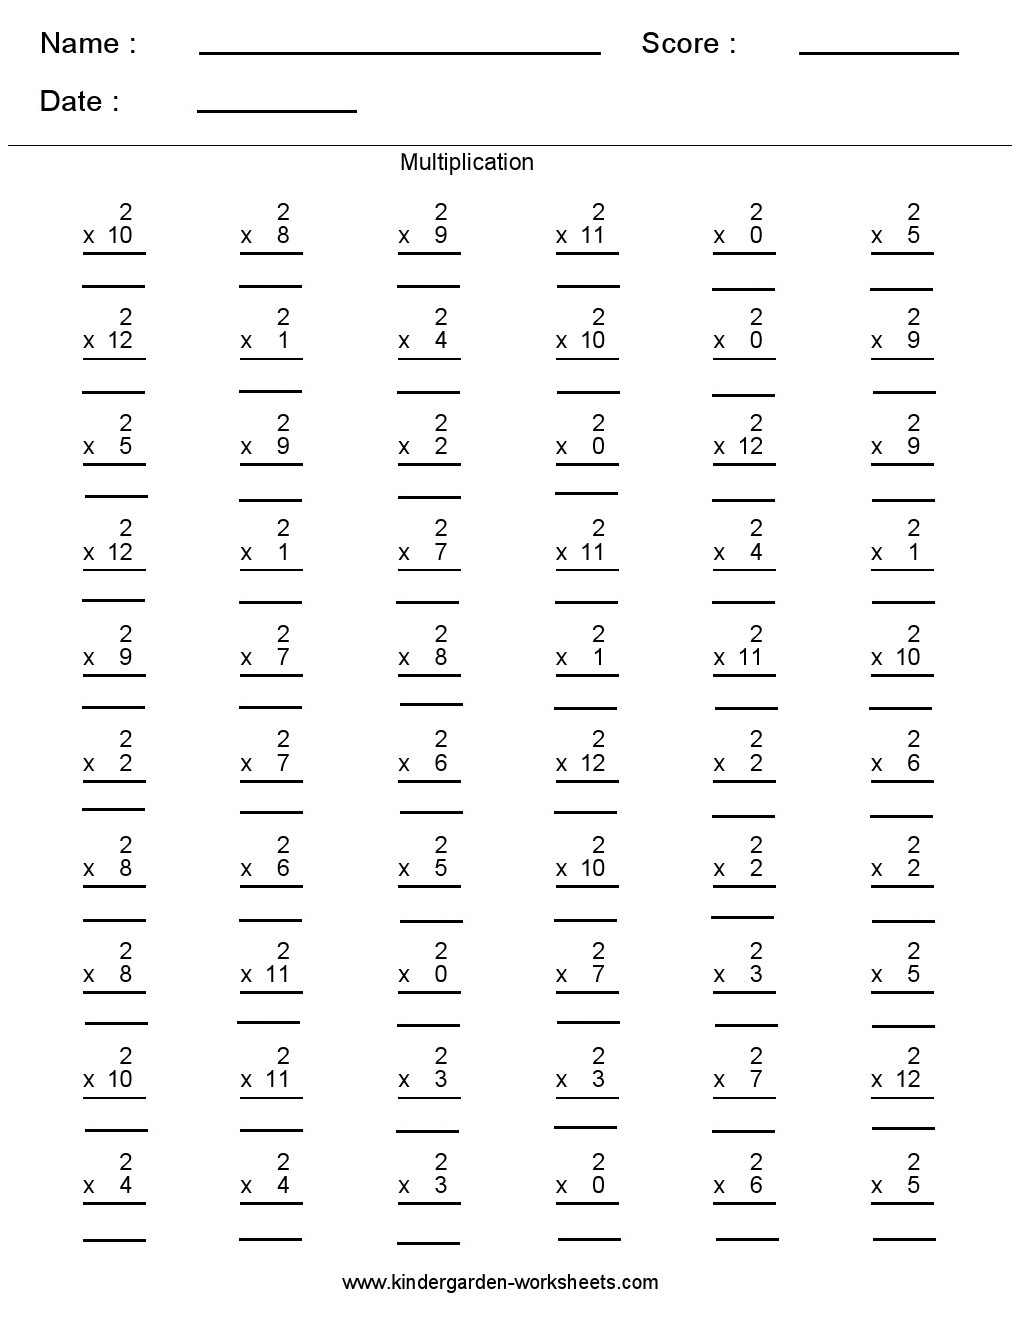  Multiplication Table Worksheets 1 10